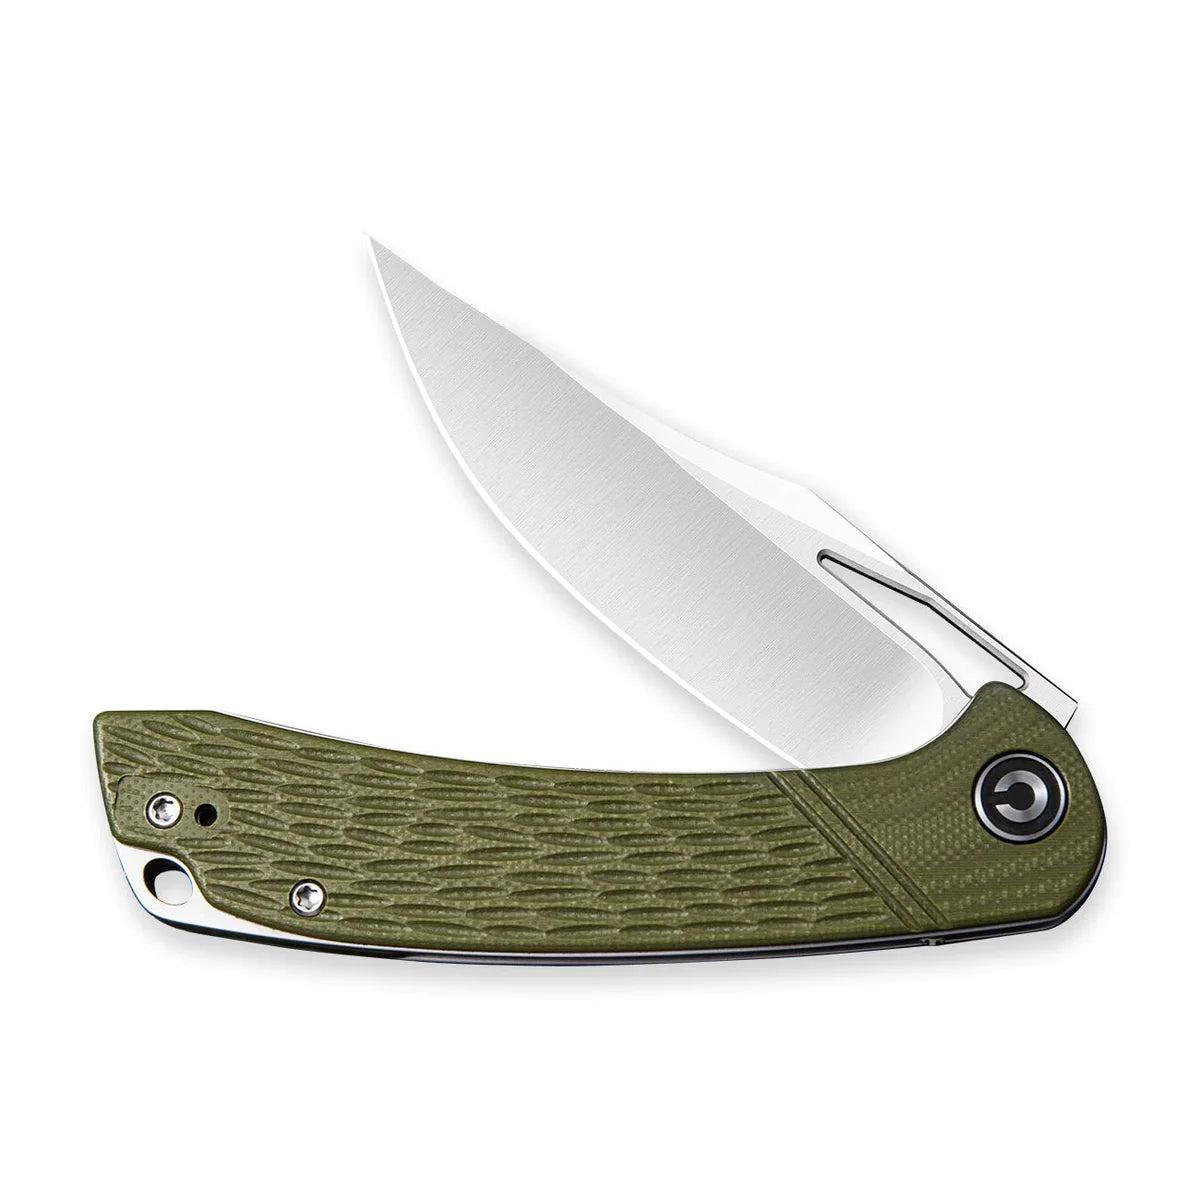 Civivi 2005A Dogma Flipper Folding Knife – D2 Blade w/ OD Green G10 Handle | Civivi Knives